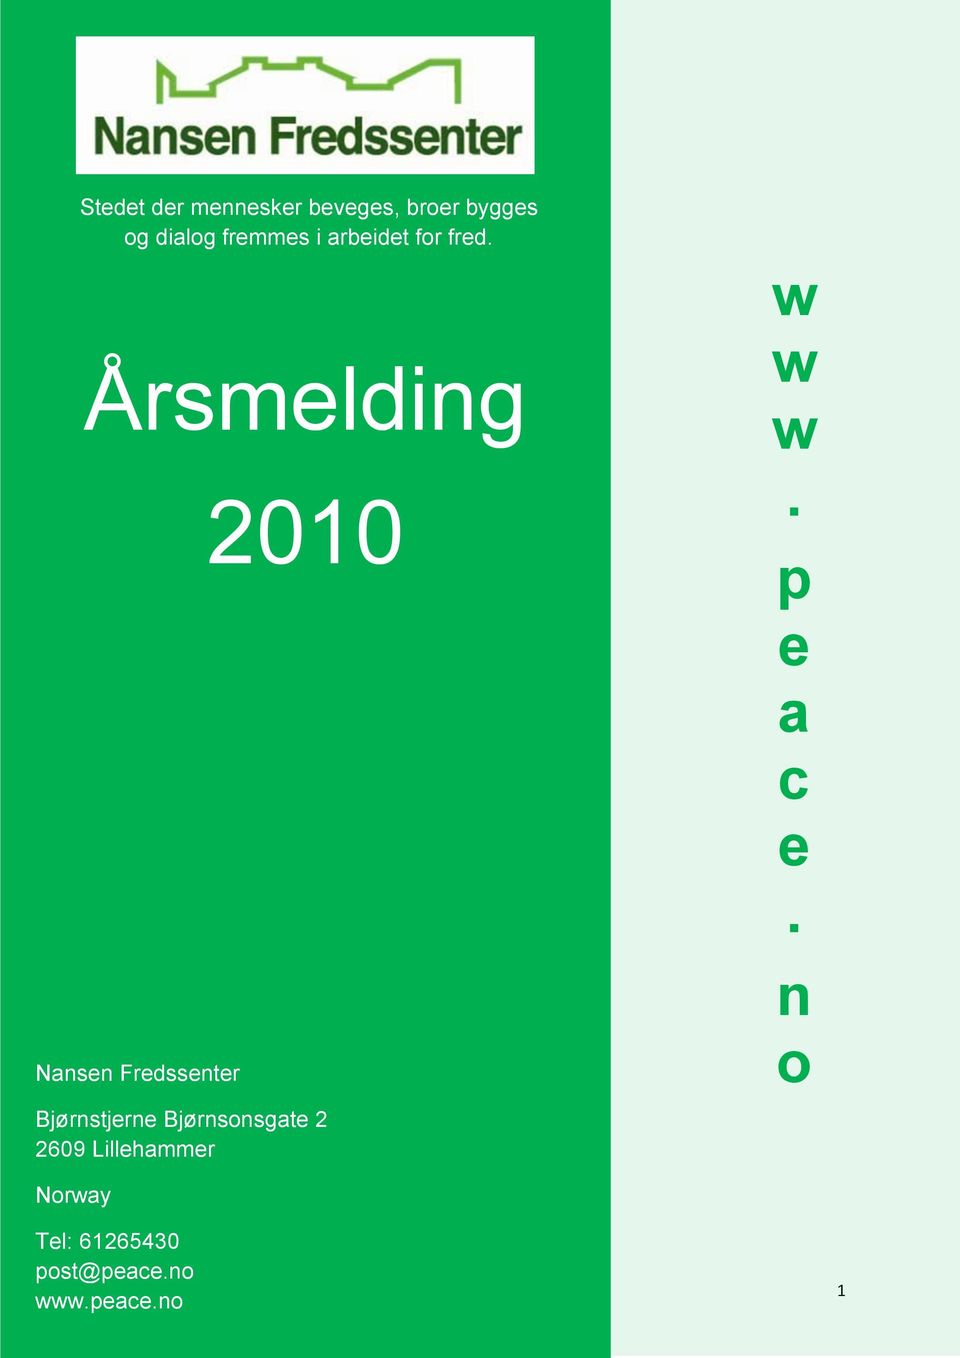 Årsmelding Nansen Fredssenter 2010 w w w. p e a c e.